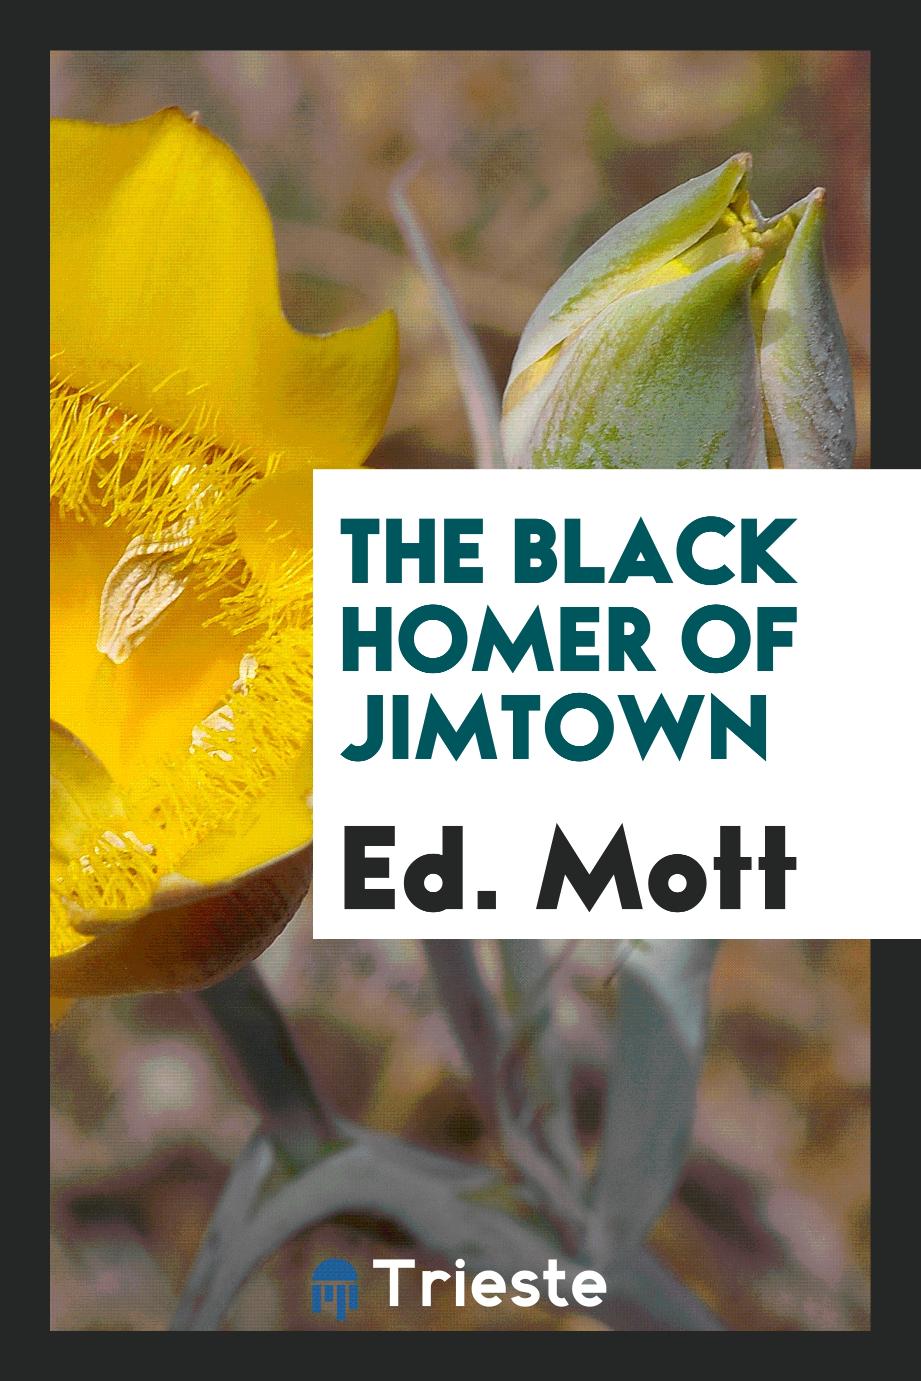 The black Homer of Jimtown